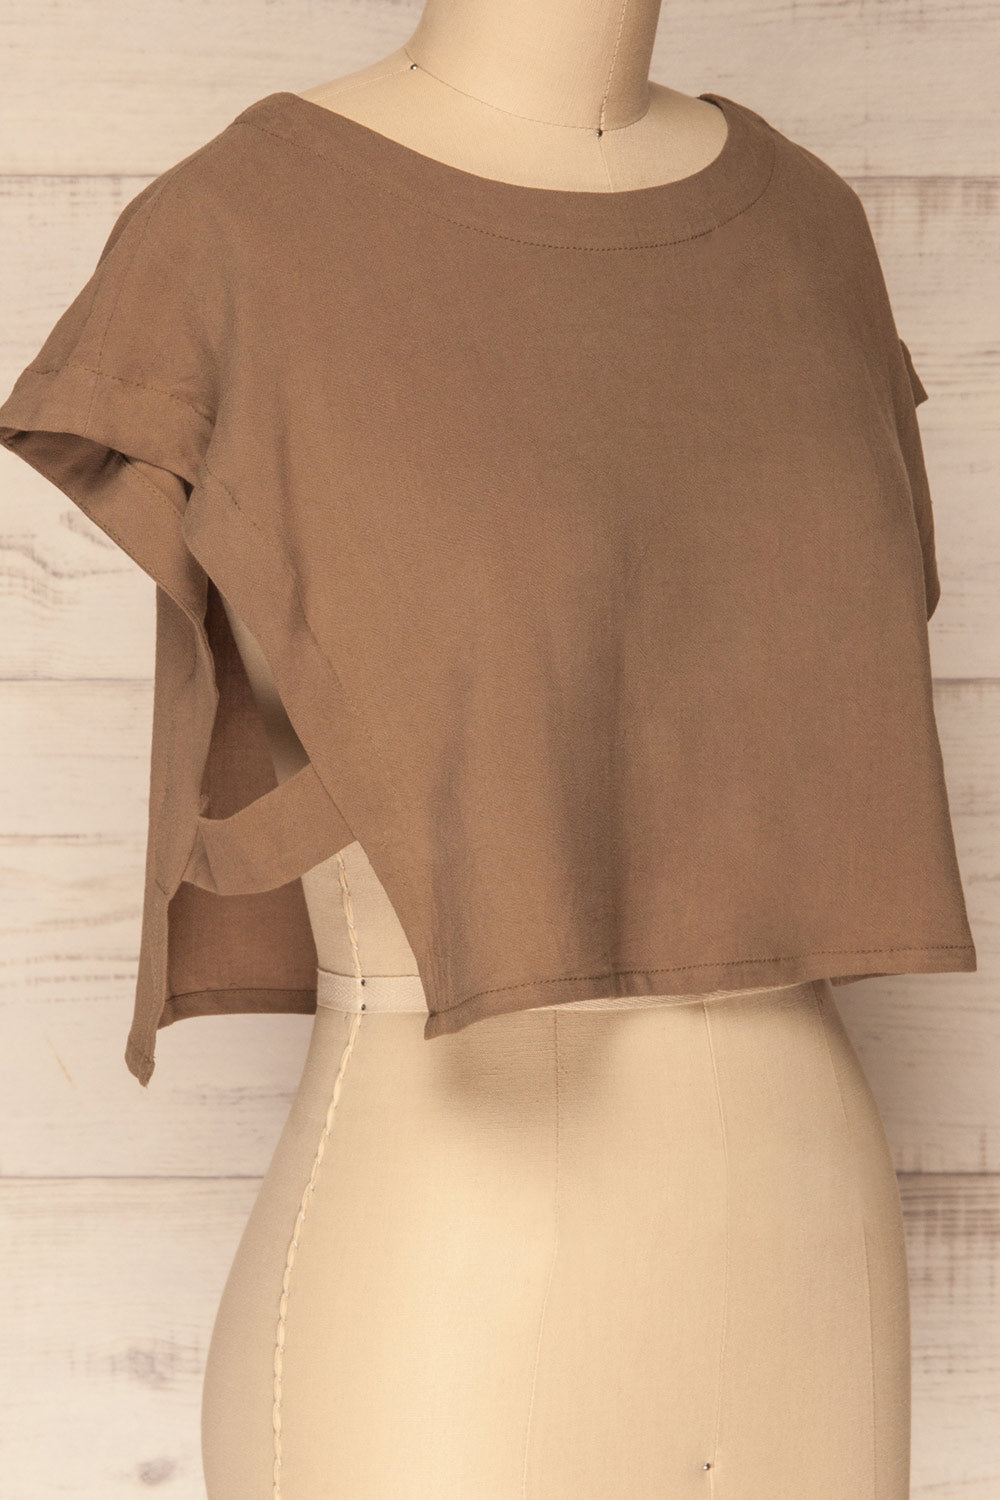 Balhary Khaki Short Sleeved Crop Top | La Petite Garçonne Chpt. 2 3